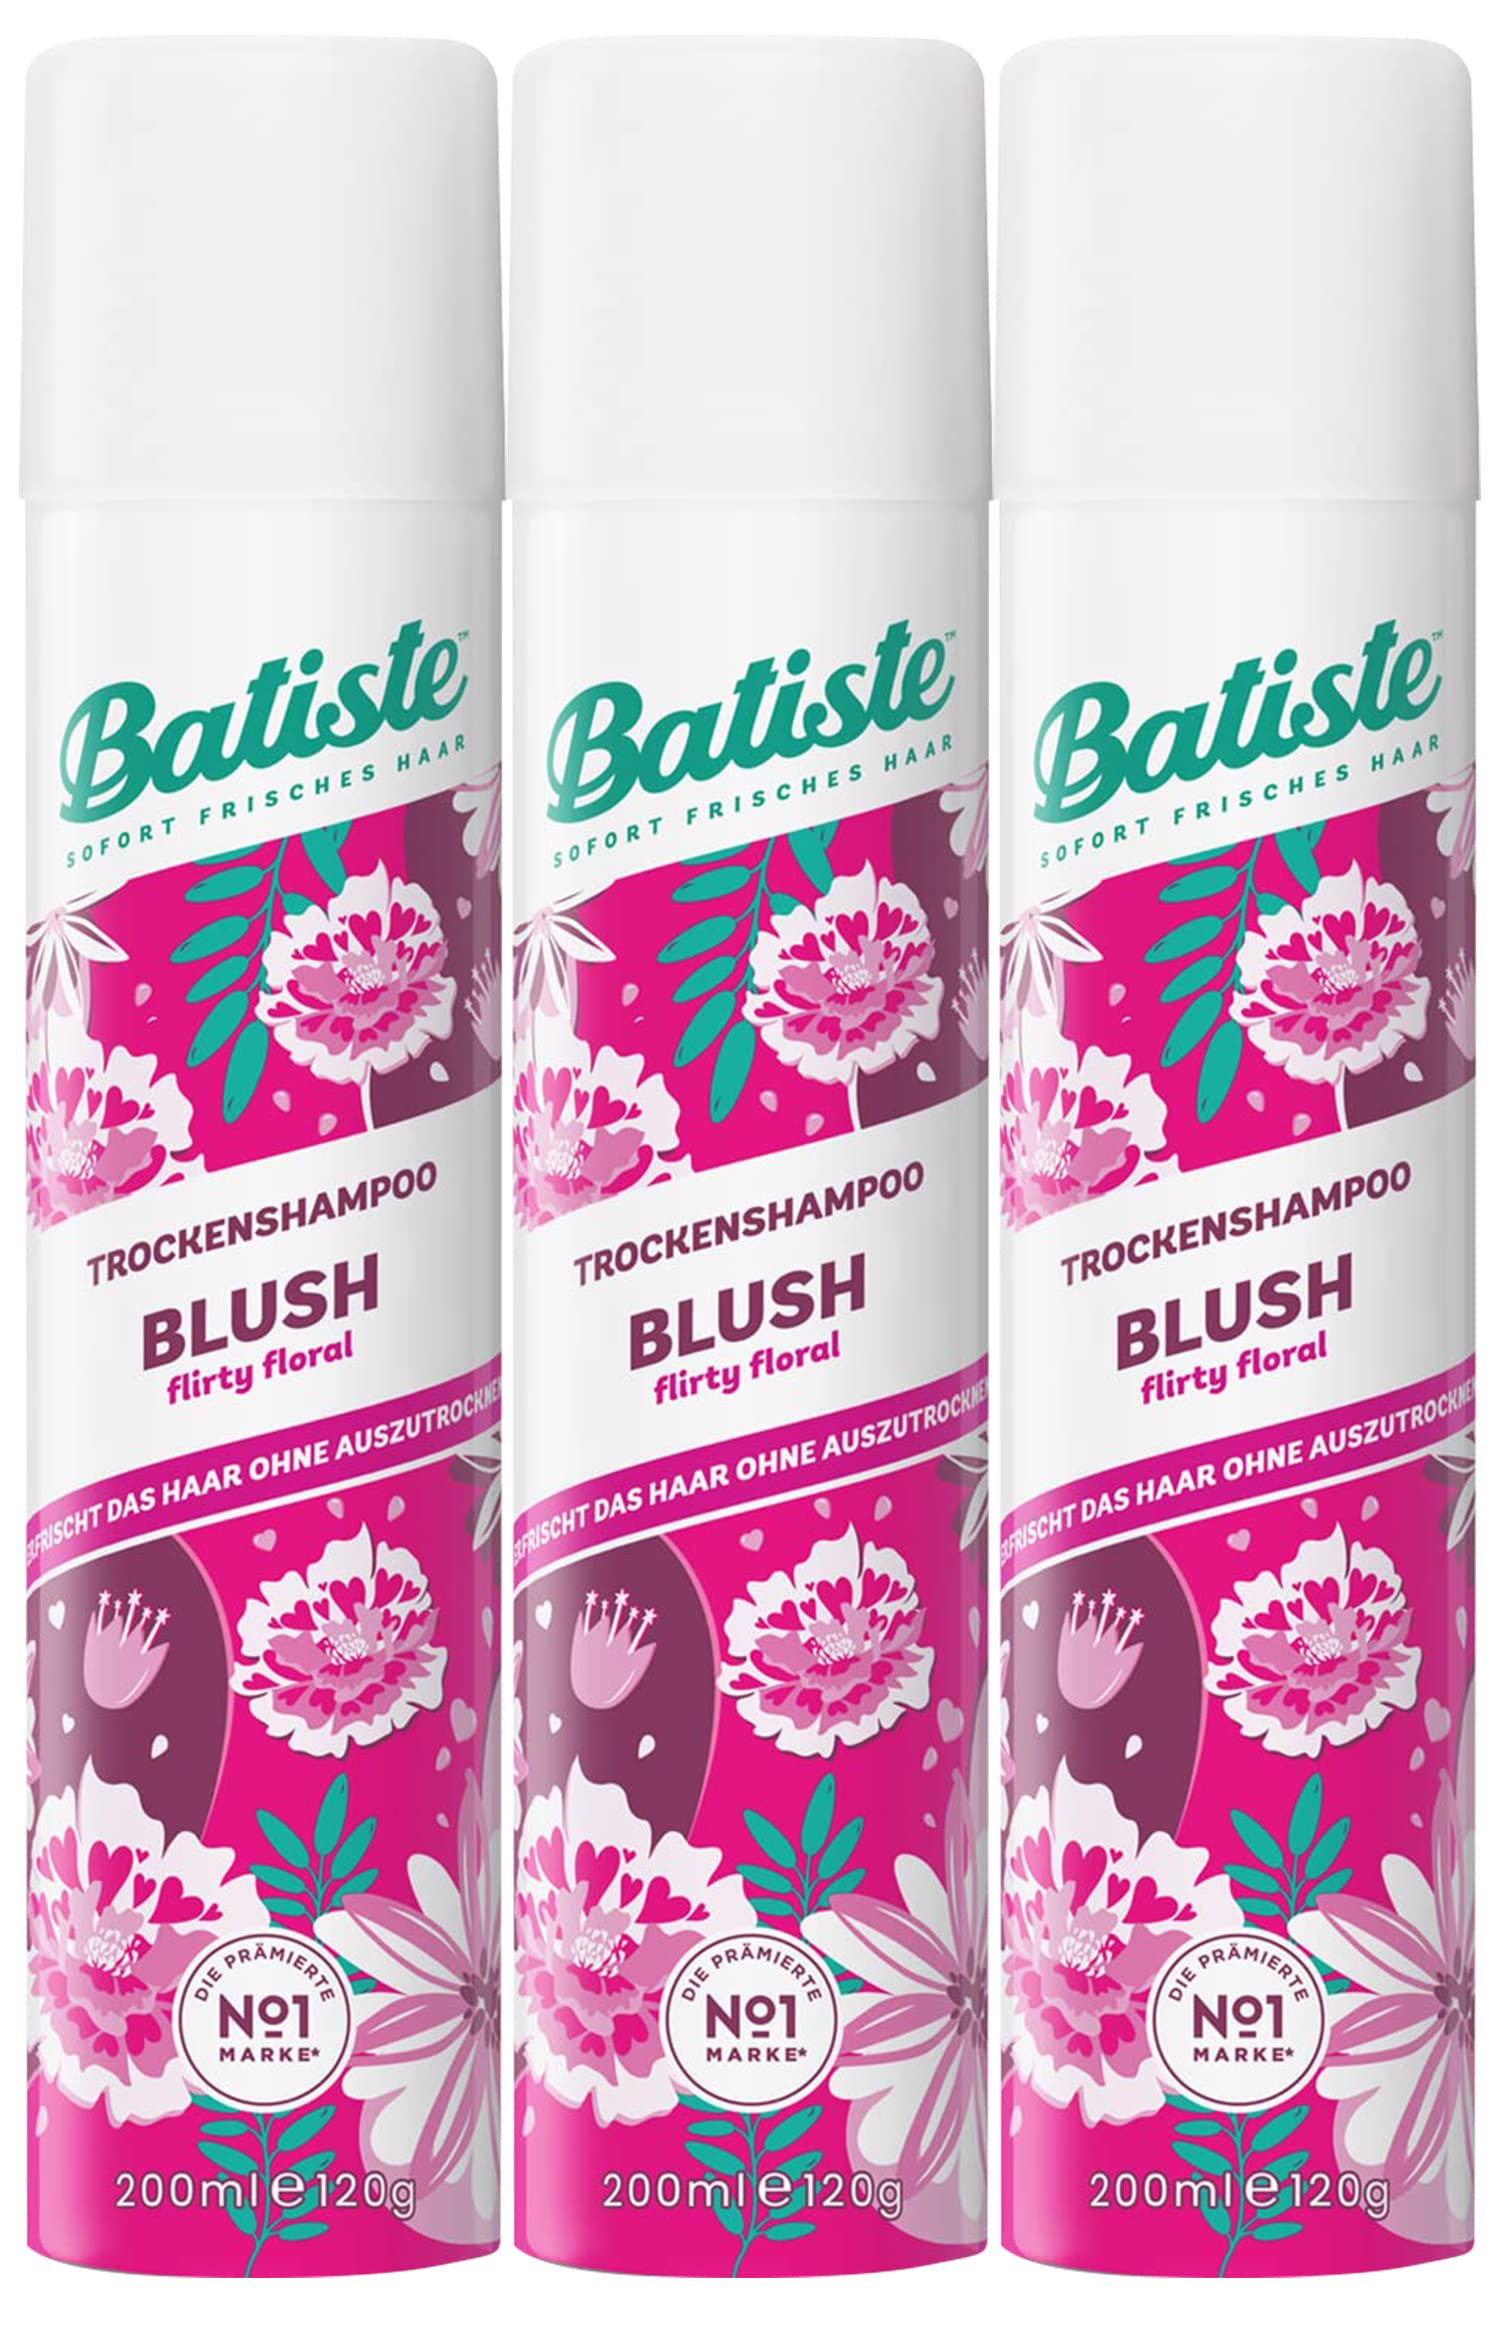 Batiste Trocken-Shampoo Blush, 200 ml, 6 Stück (1er Pack)